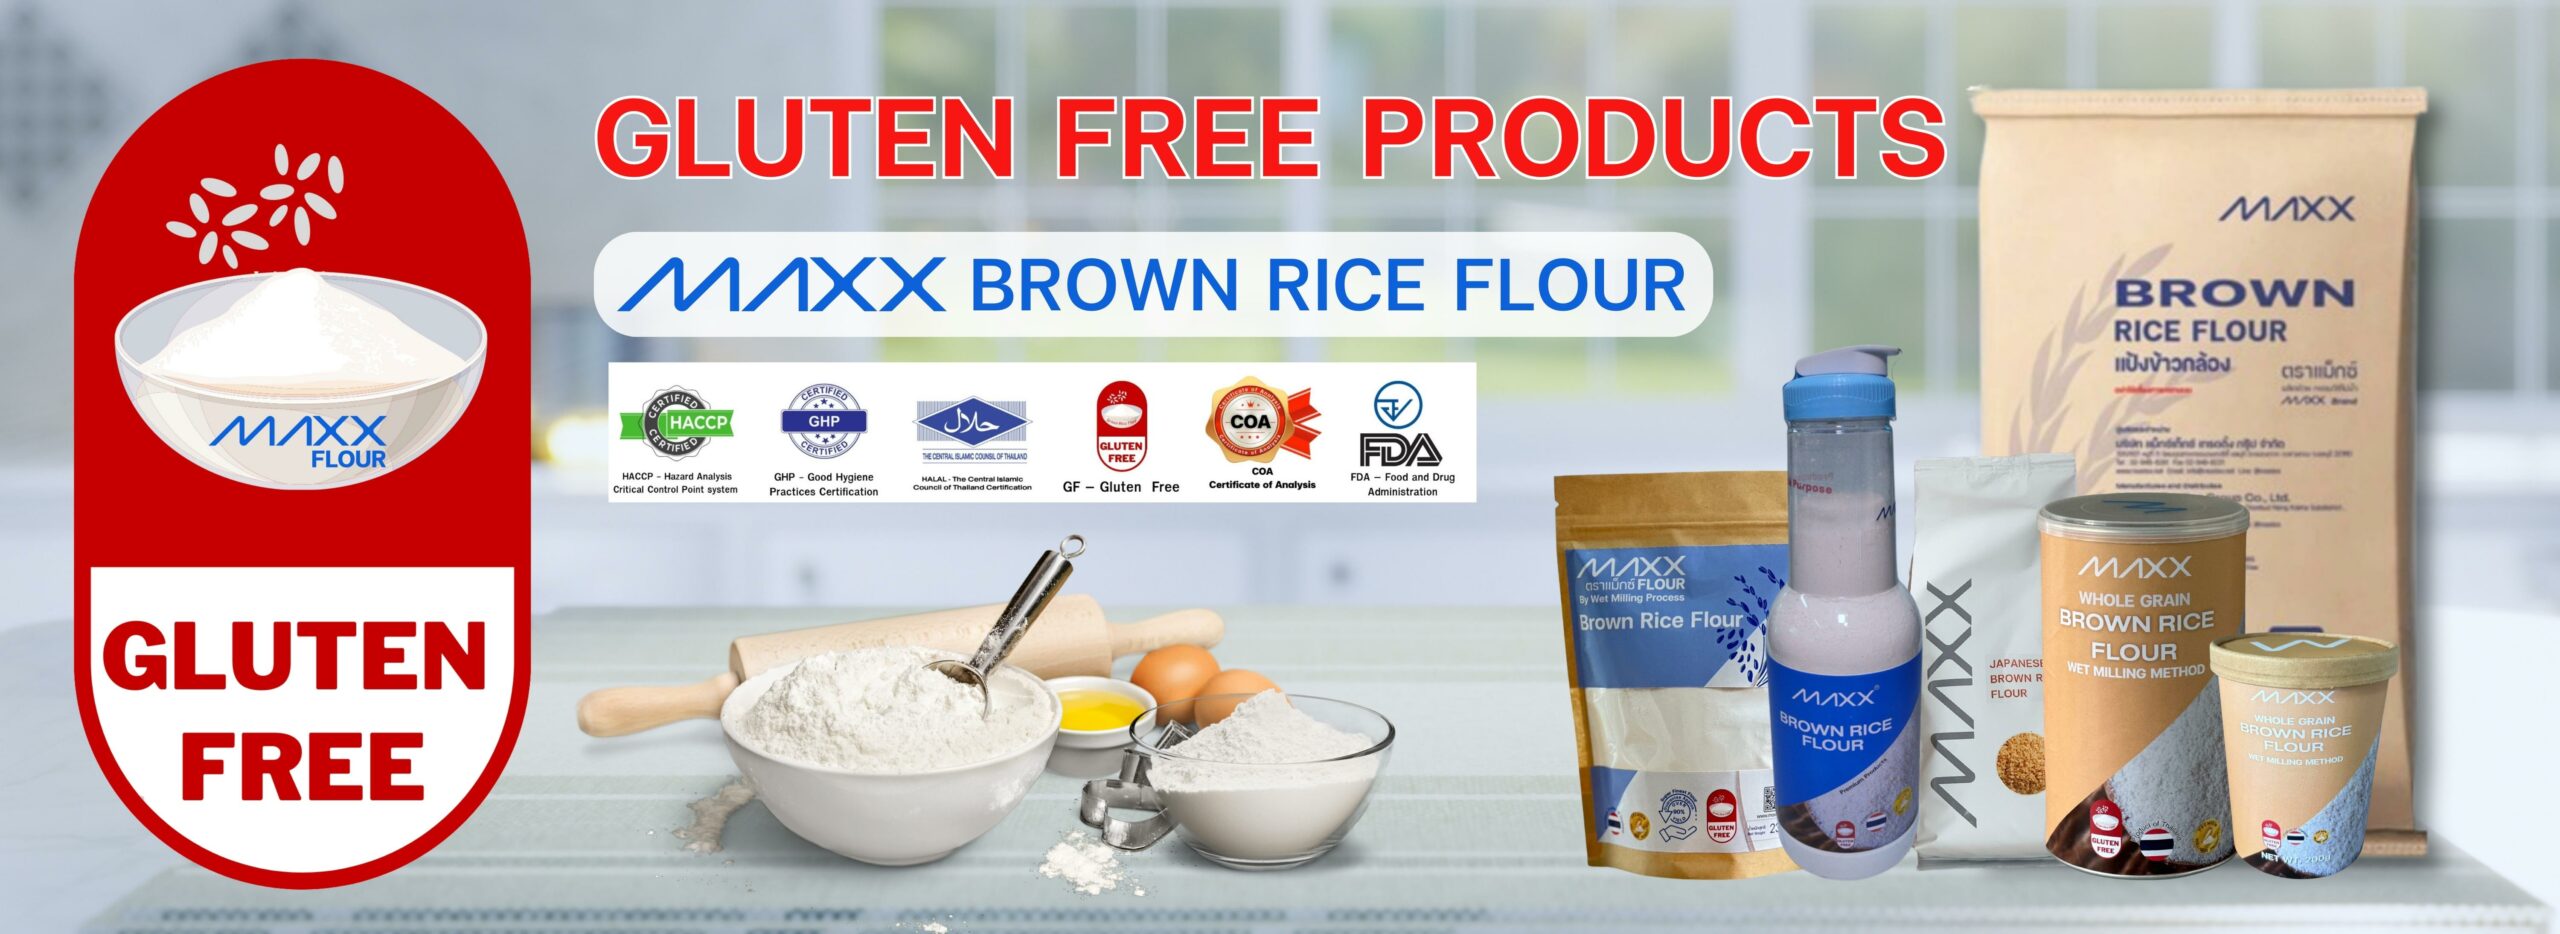 Brown-rice-flour23